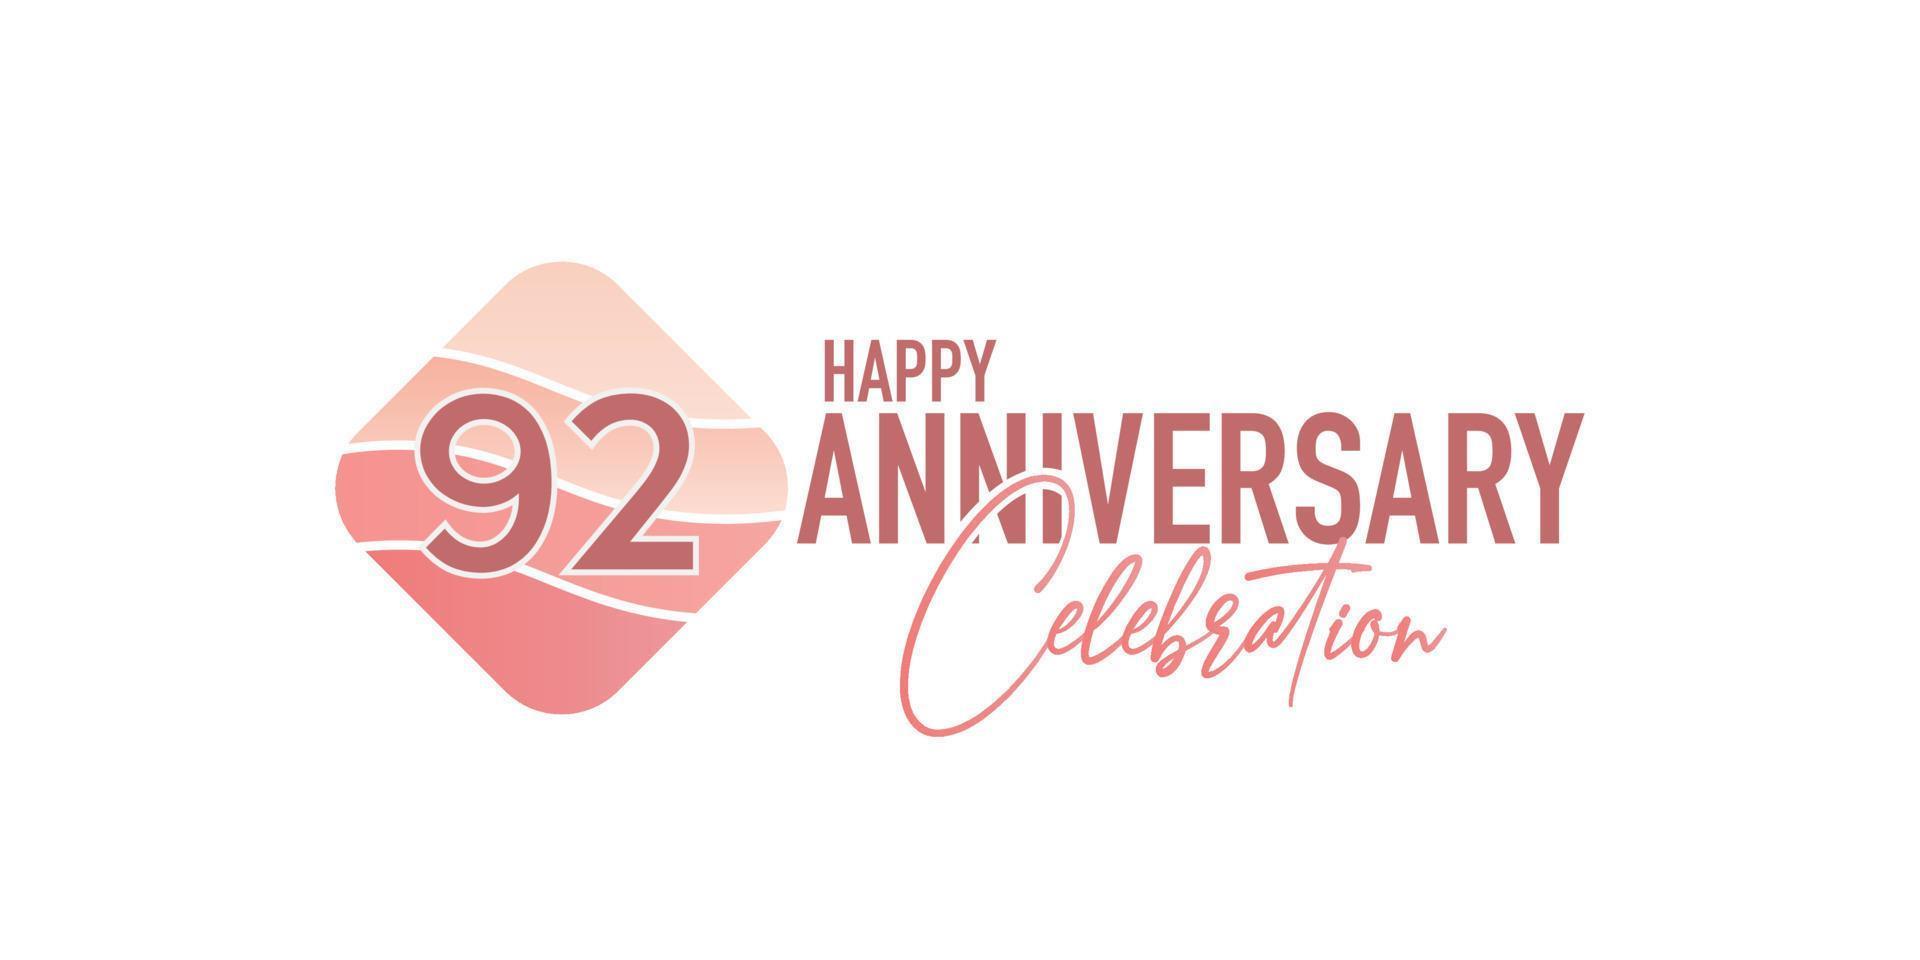 92 years anniversary logo vector illustration design celebration with pink geometric design